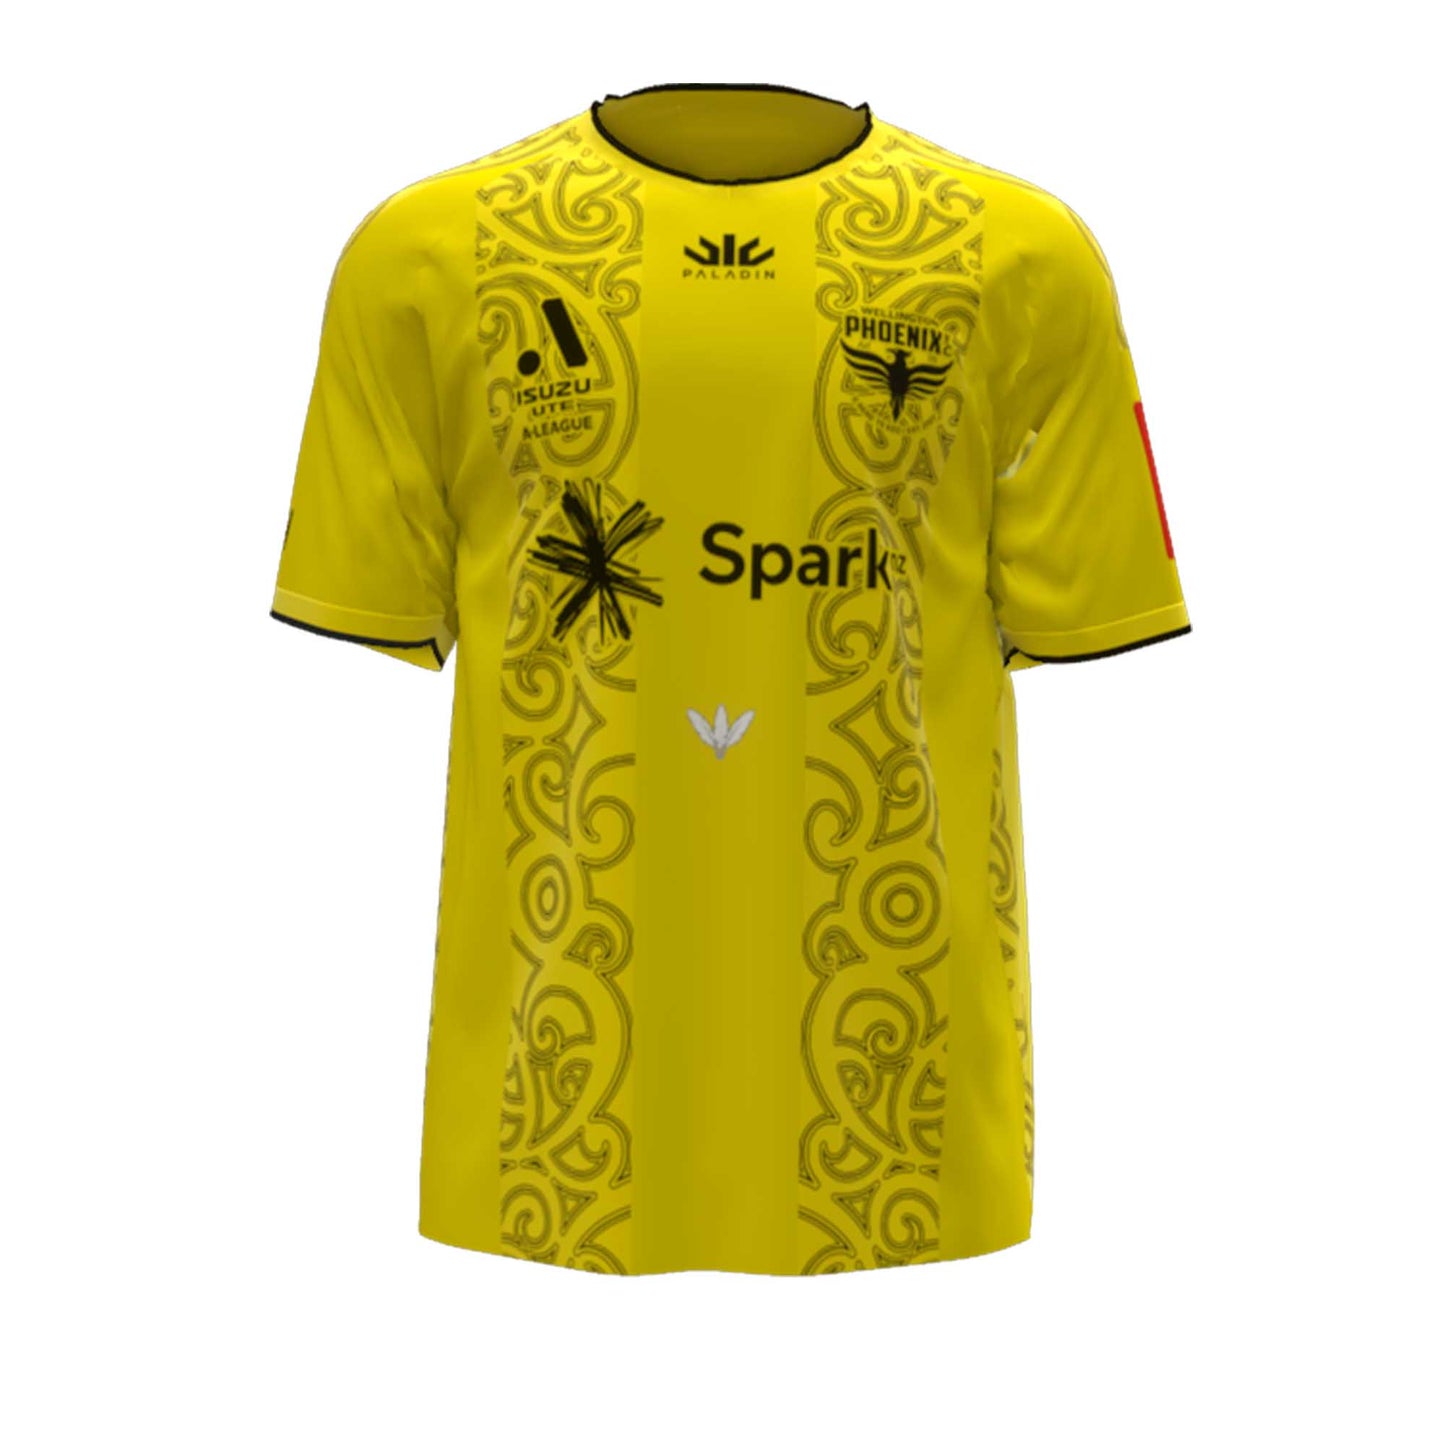 Wellington Phoenix A-League Replica Yellow Jersey - Men